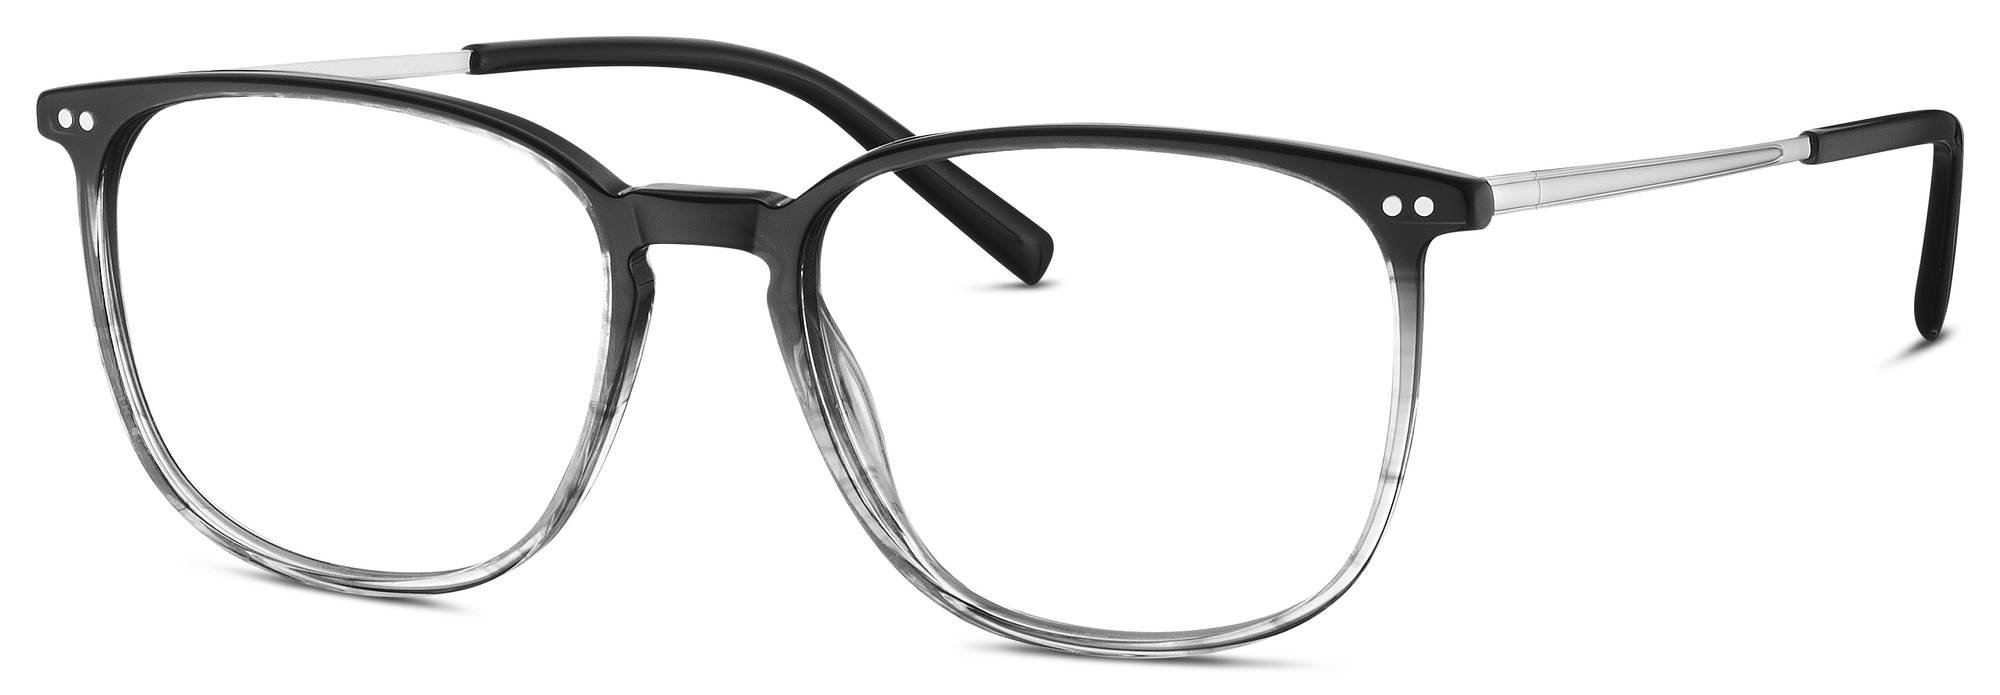 MARC O'POLO Eyewear 503165 10 schwarz / transparent